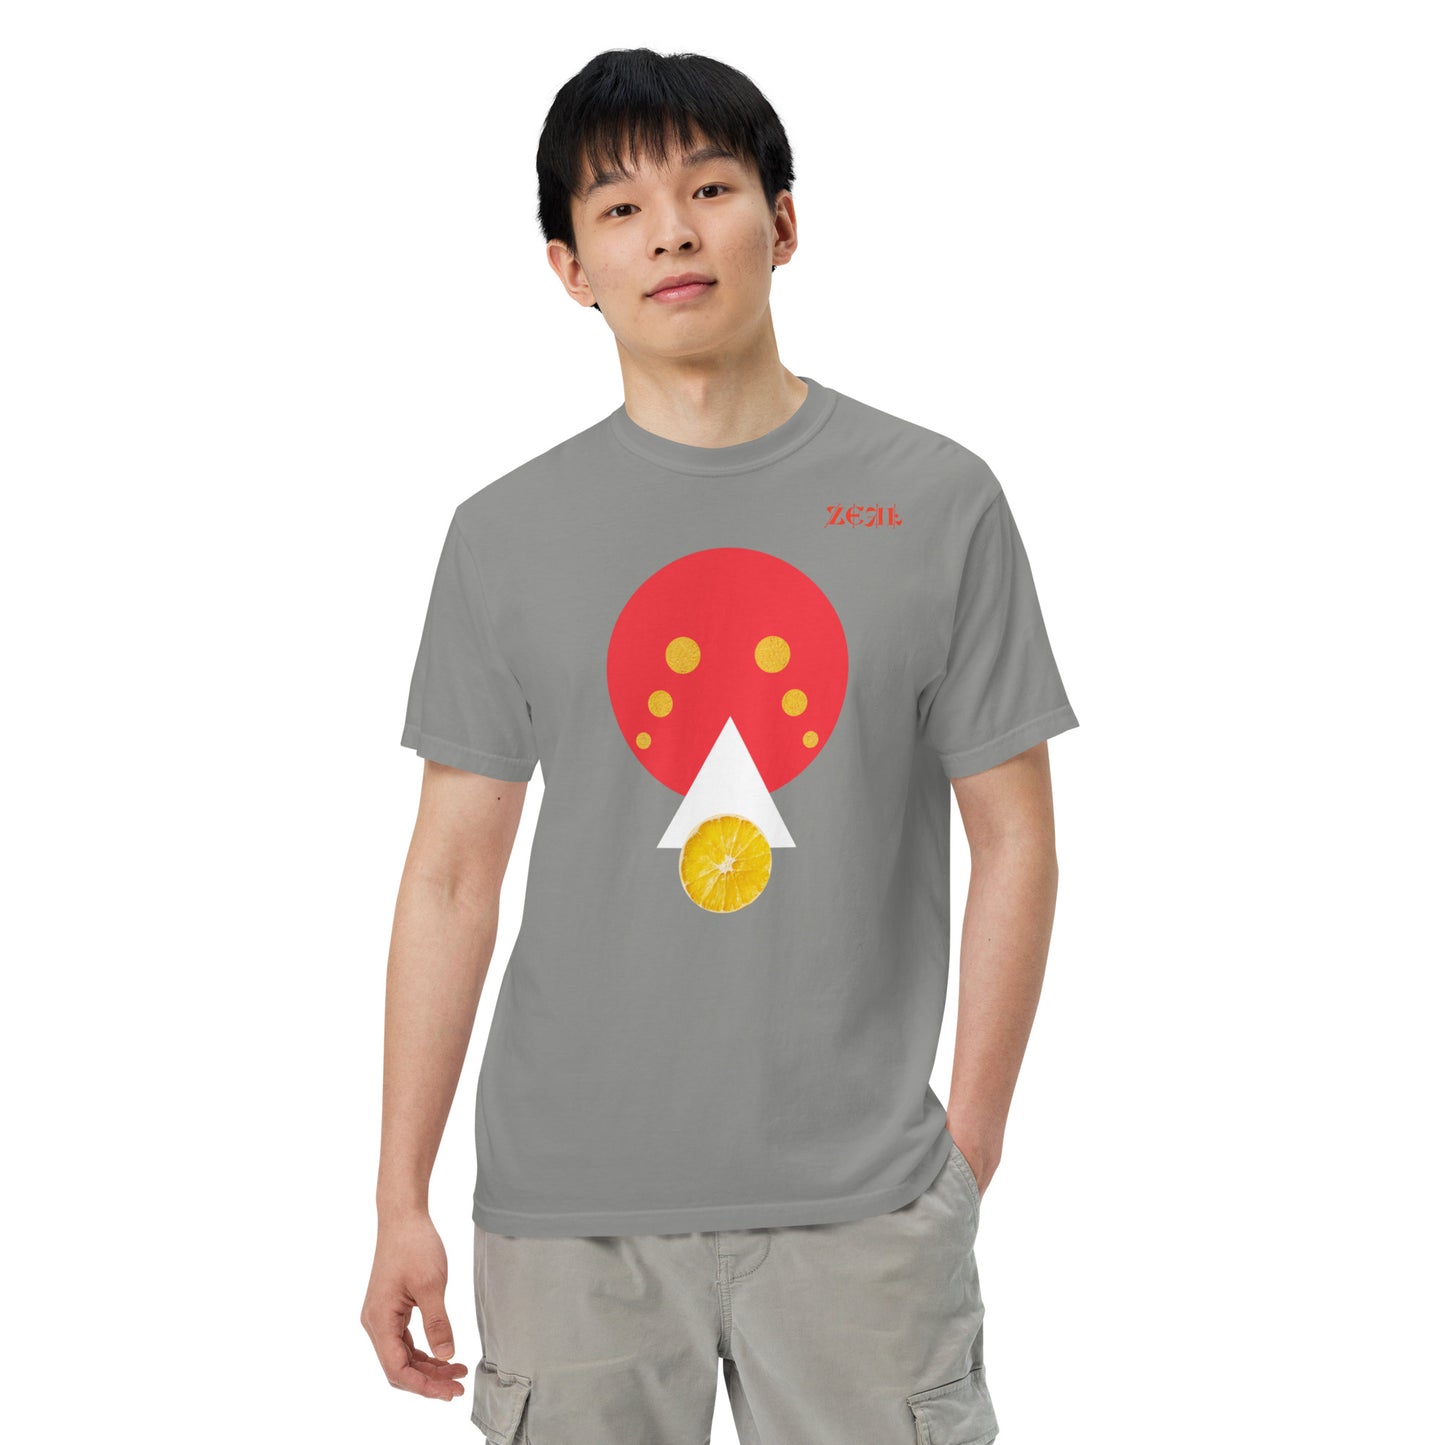 Heavyweight Lemon t-shirt |Unique design tshirts for men| ONLYZ3AL